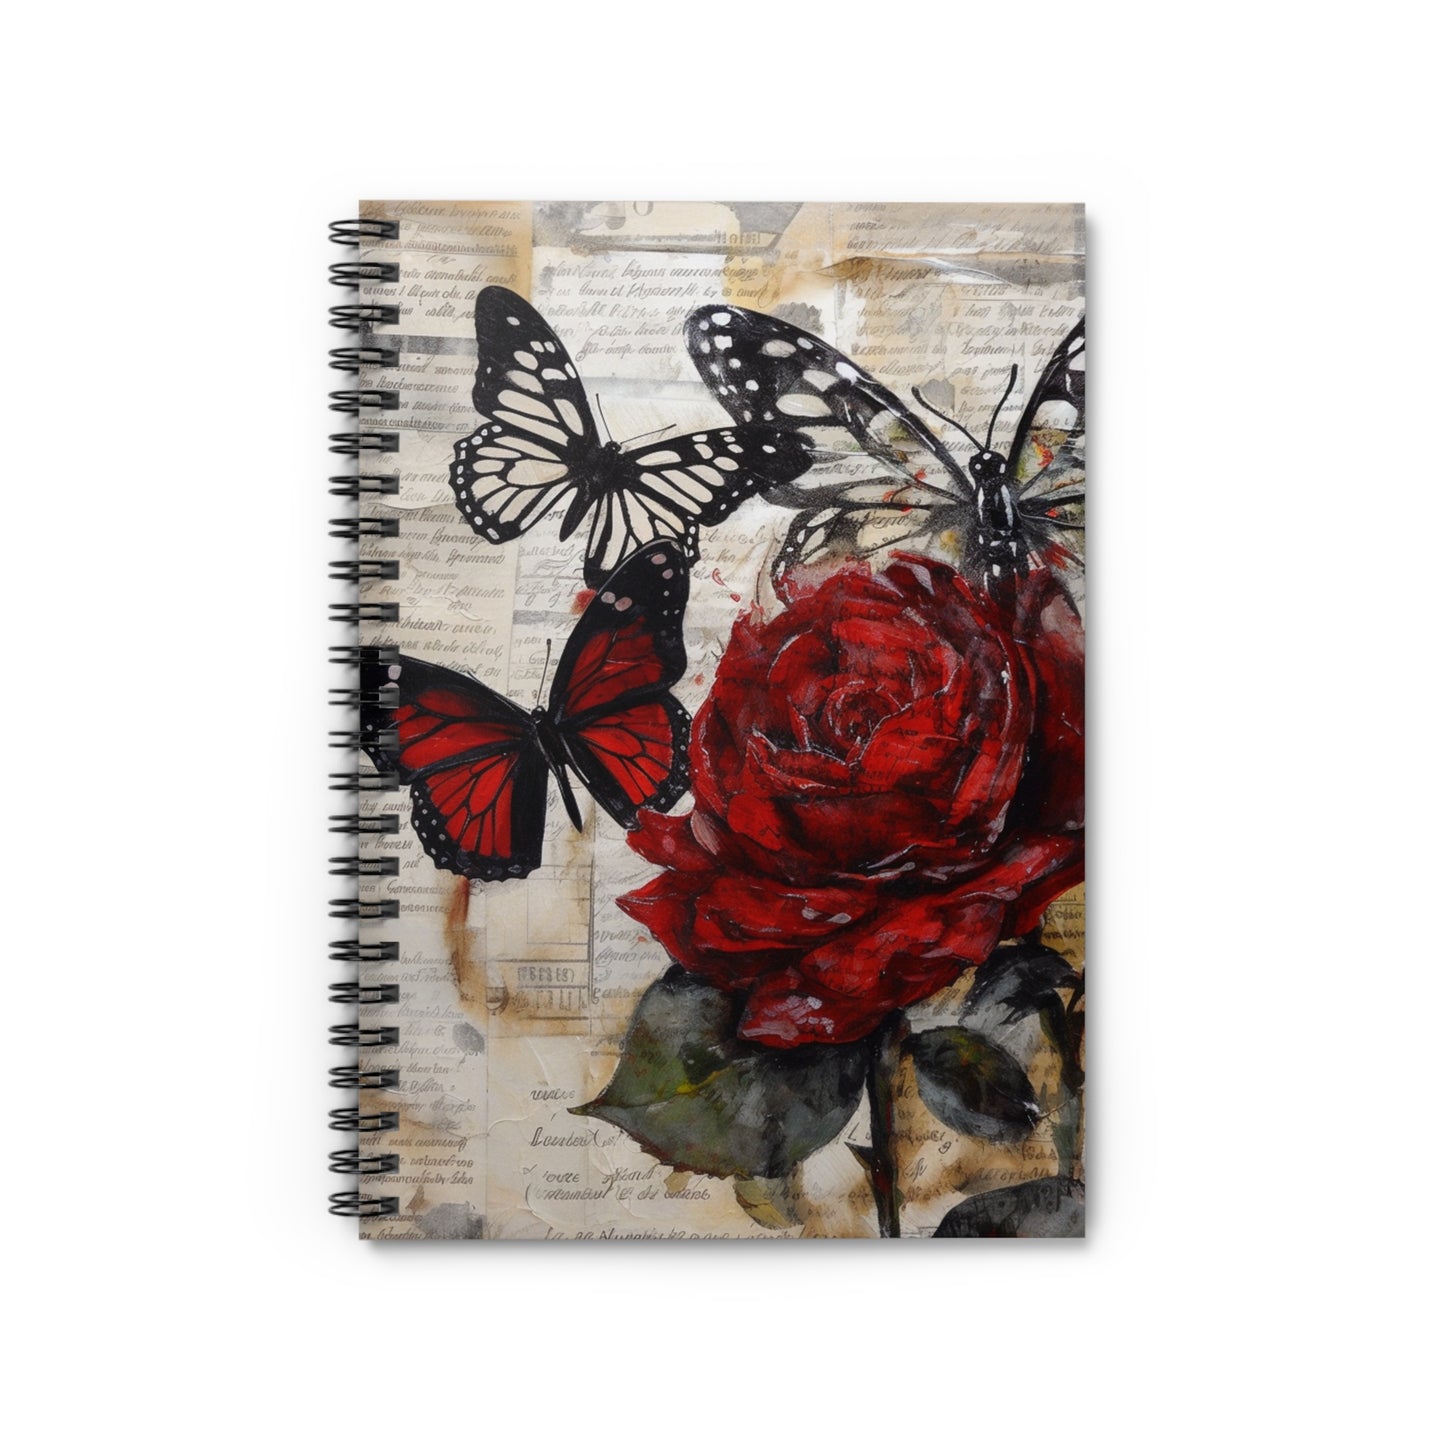 Spiral notebook - Butterflies and a Red Rose